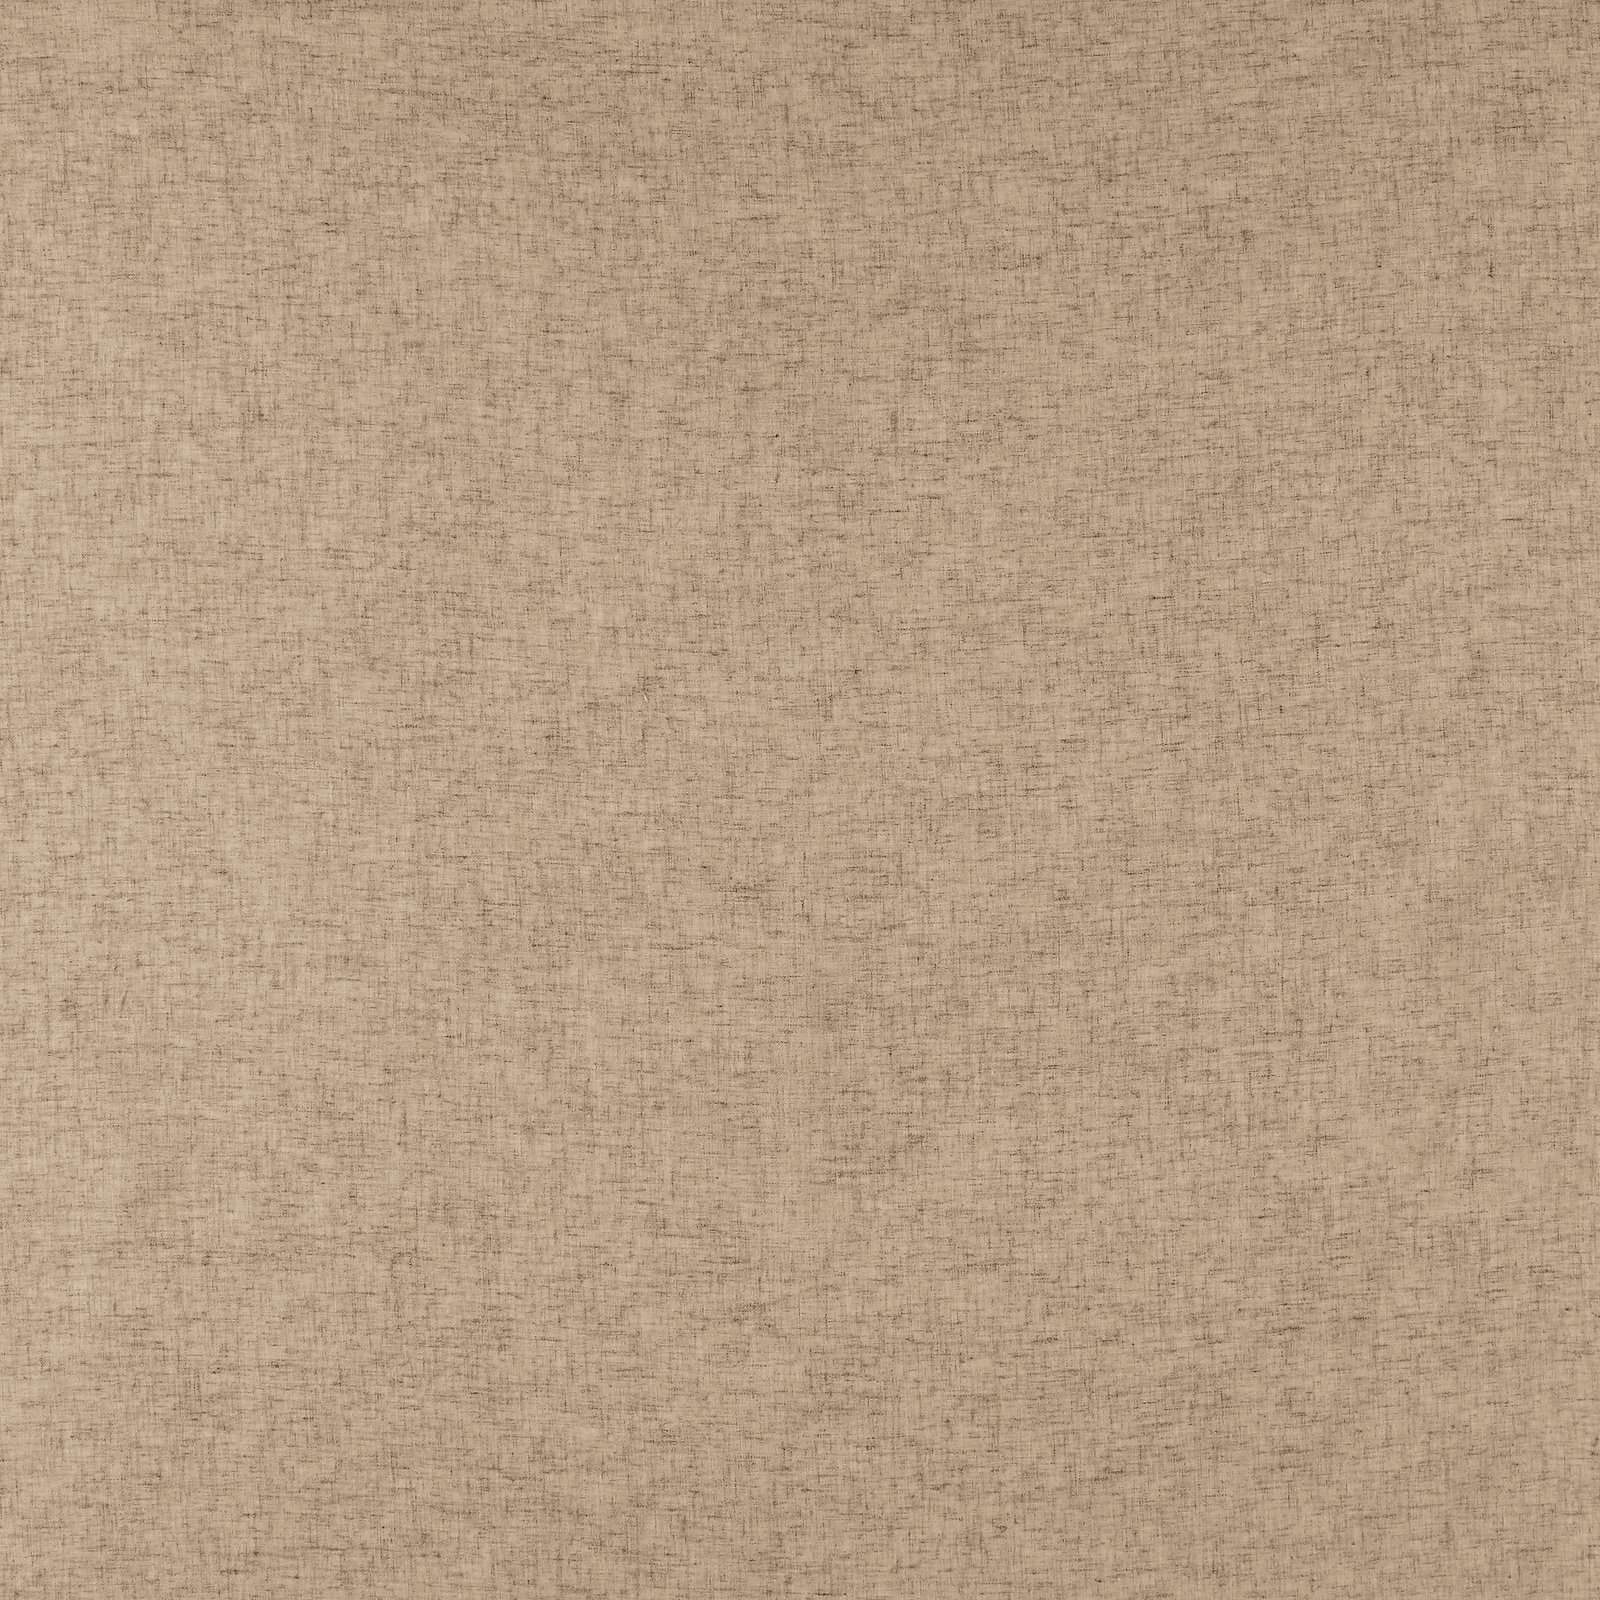 Voile walnut polyester/linen blend 835175_pack_solid